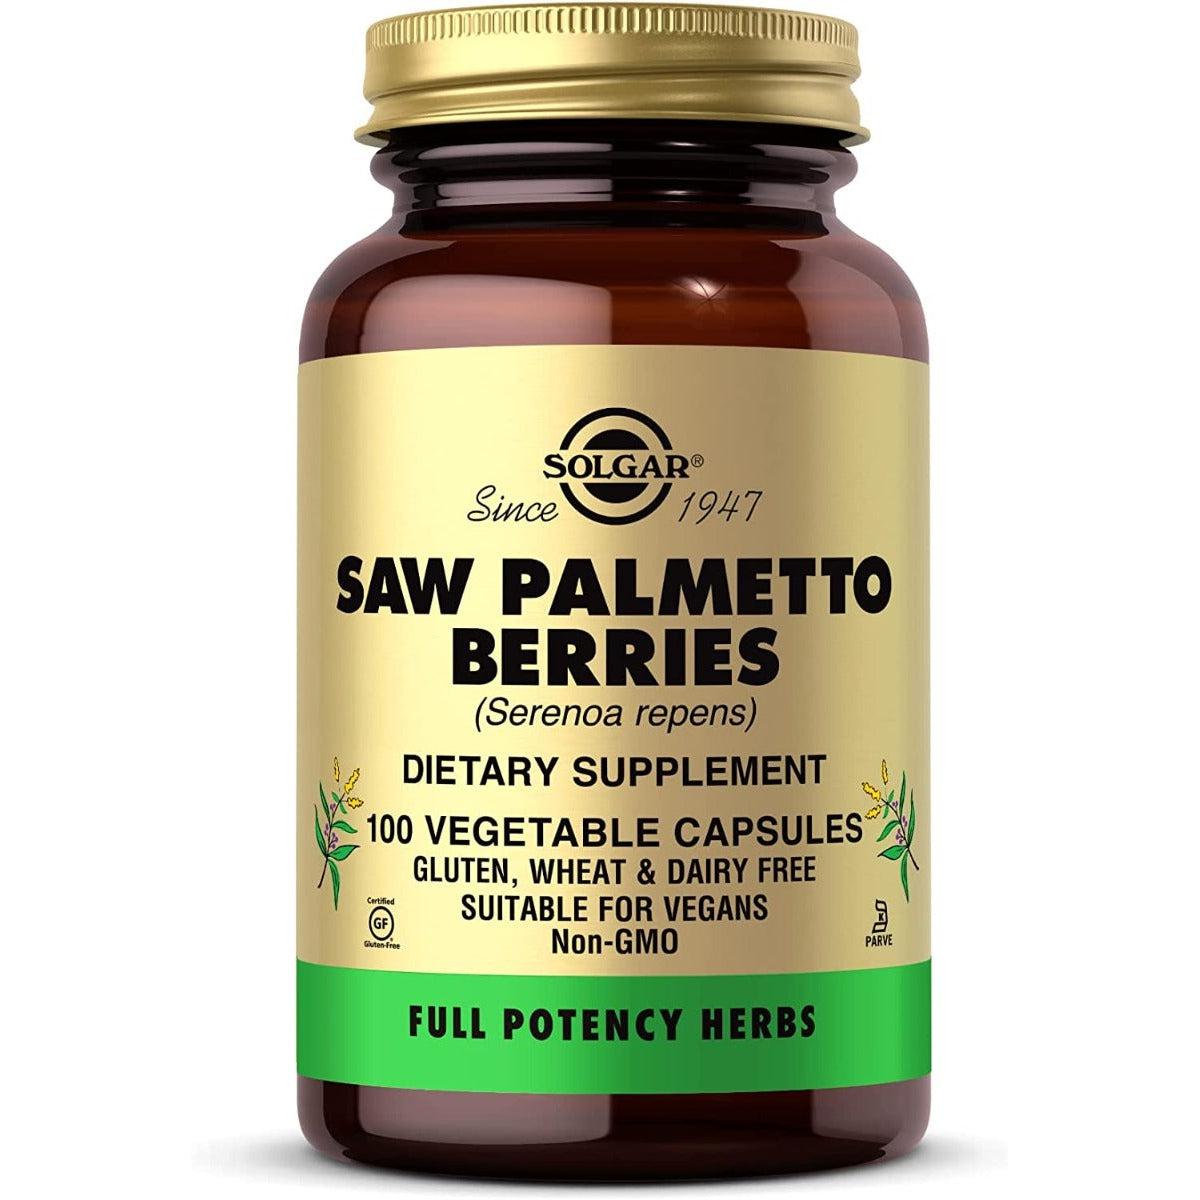 Solgar Saw Palmetto Berries Full Potency Non-GMO Vegan Gluten Free Dairy Free 100 Veg Capsules